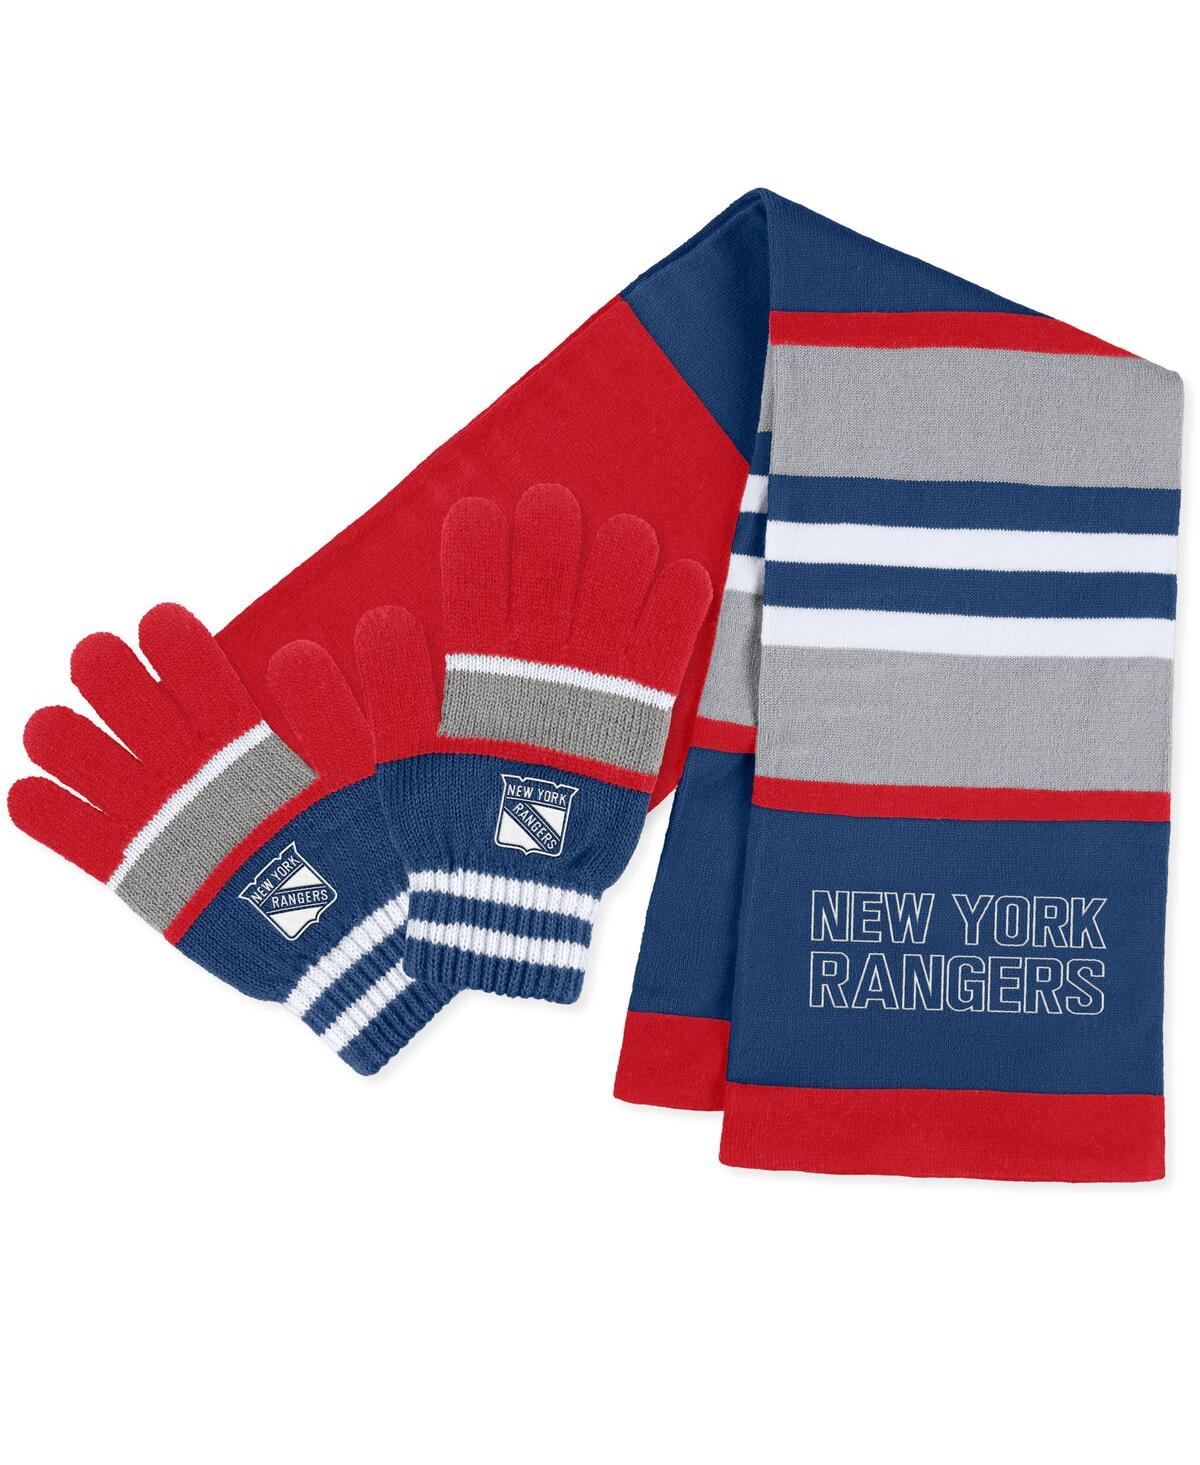 Women's Wear by Erin Andrews New York Rangers Stripe Glove and Scarf Set - Red, Navy